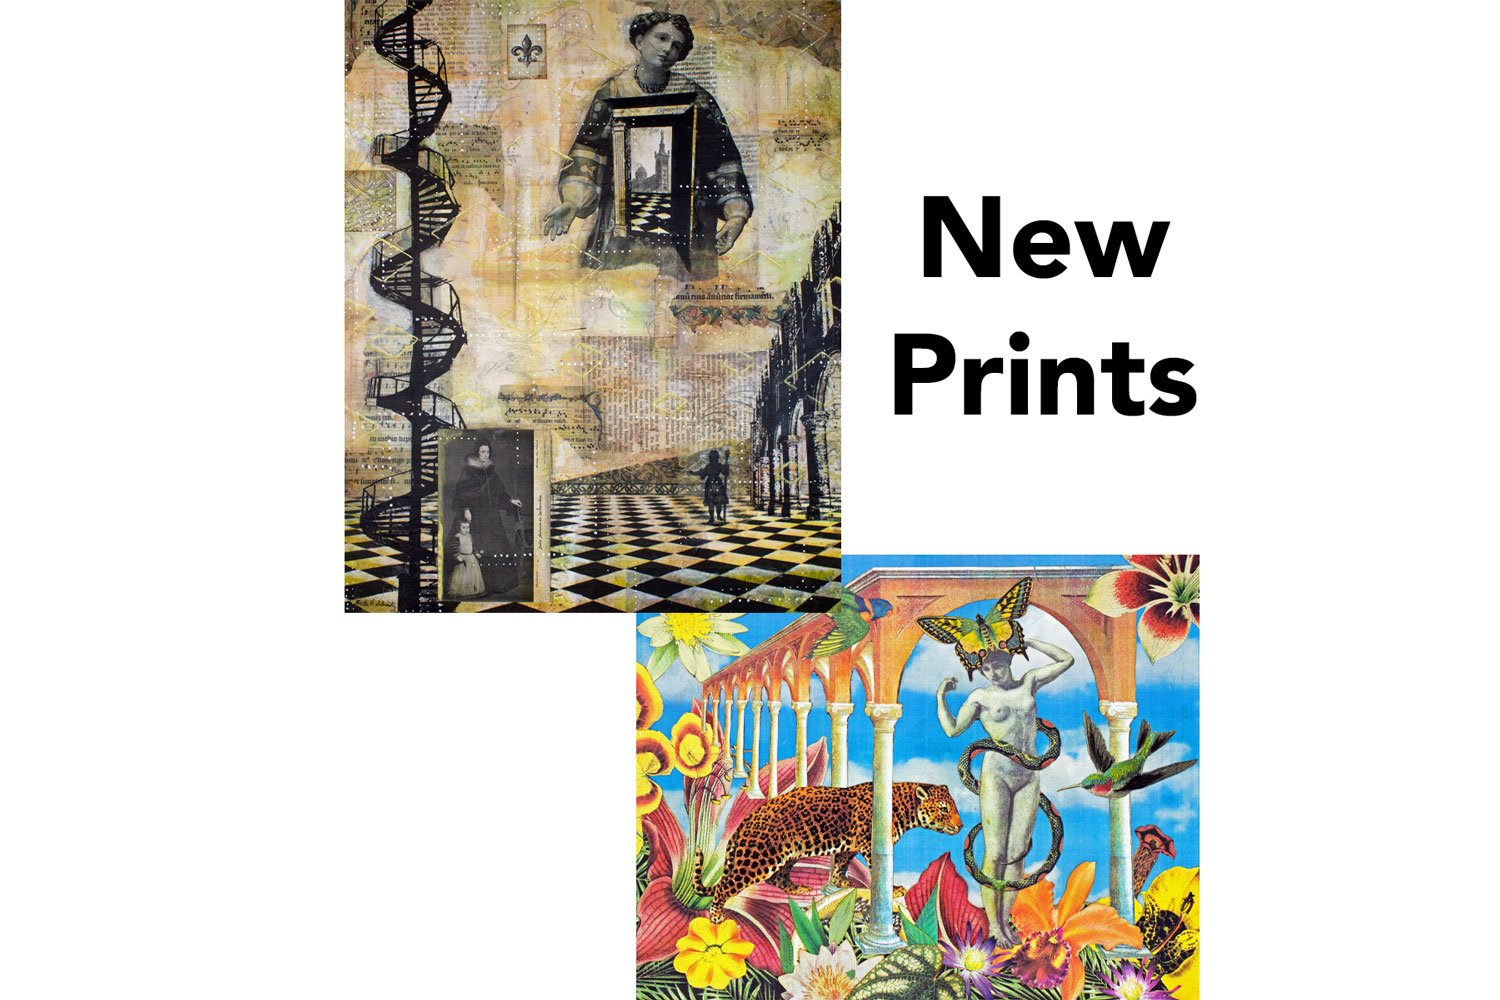 New Prints